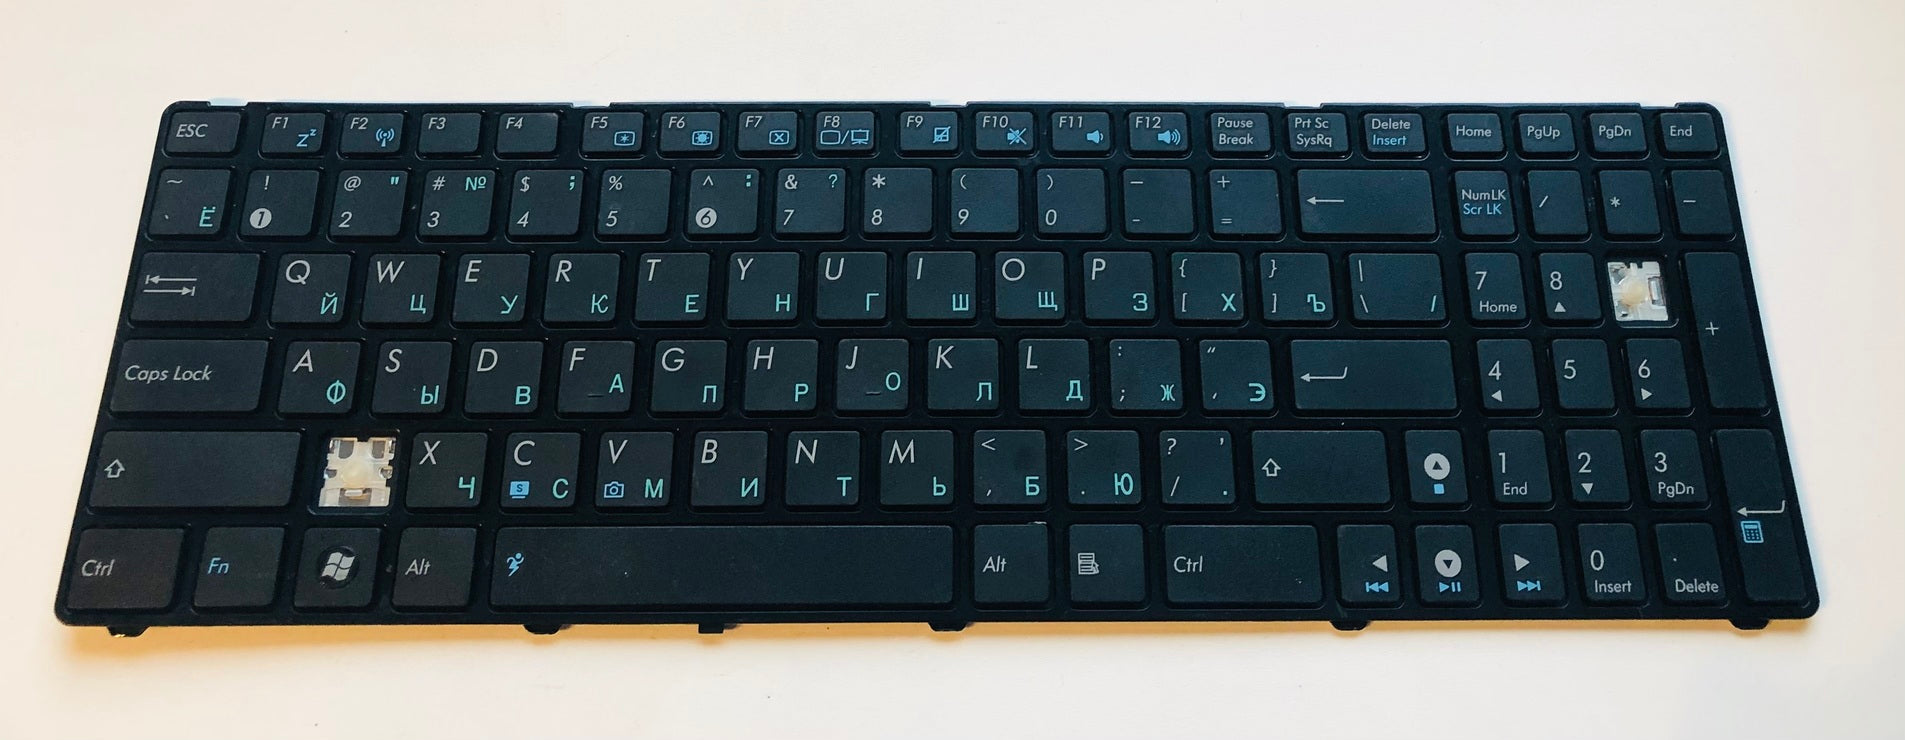 Asus G60 laptop keyboard NSK-UGC0R - for parts